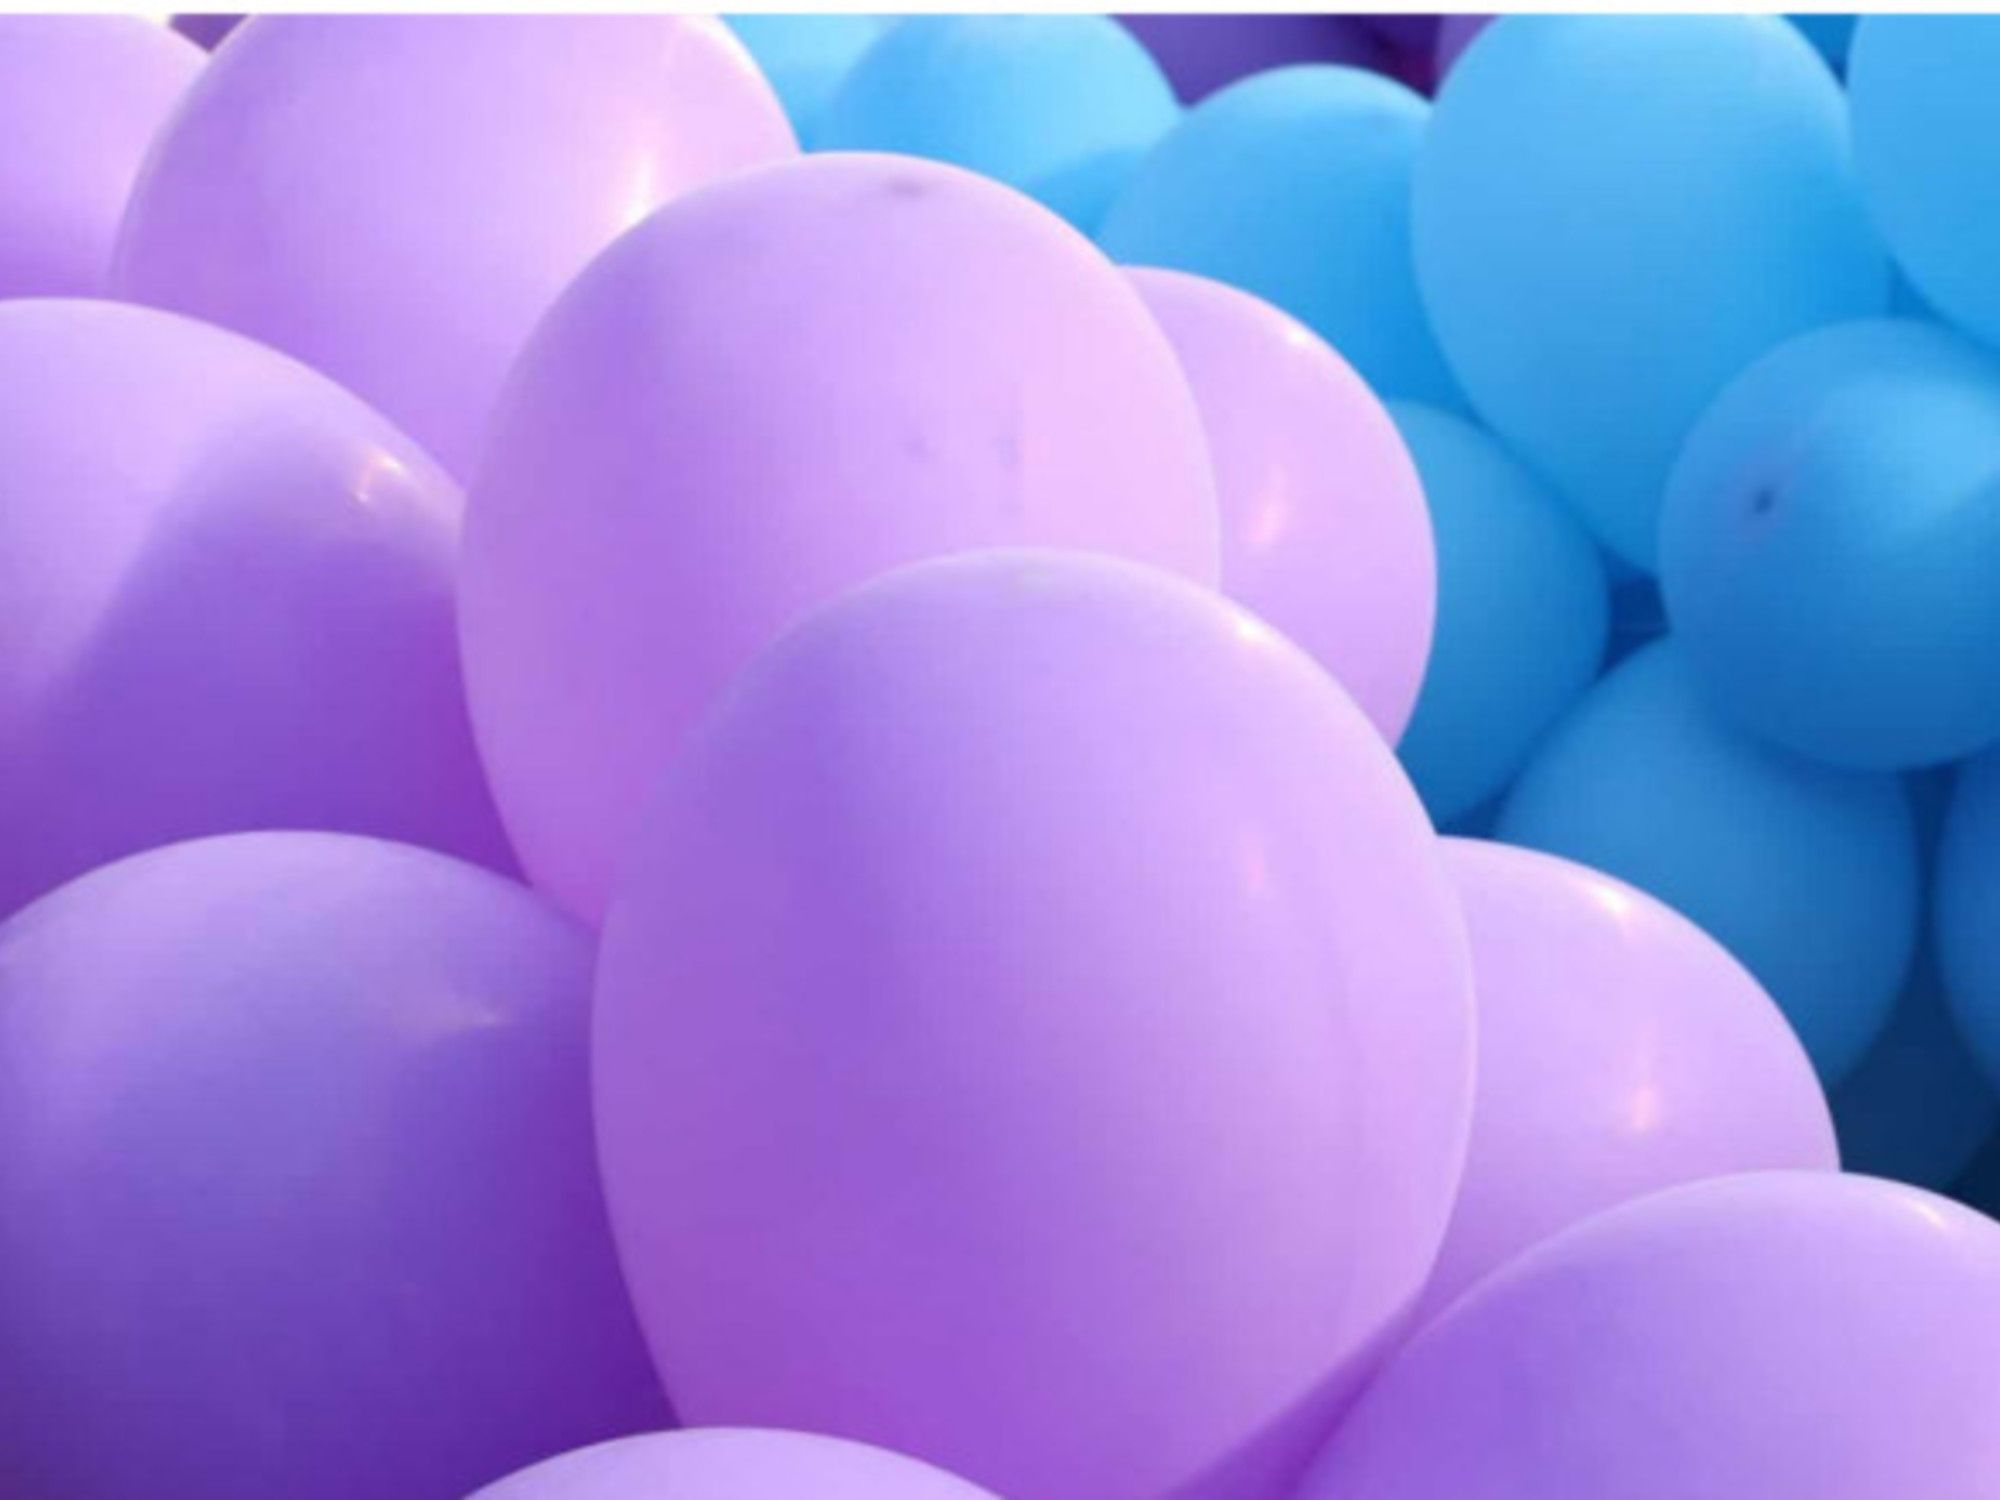  Luftballons Hintergrundbild 2000x1500. So Geht's: Ballonbogen Selber Machen. Tuf Tuf Tuf Deutschland